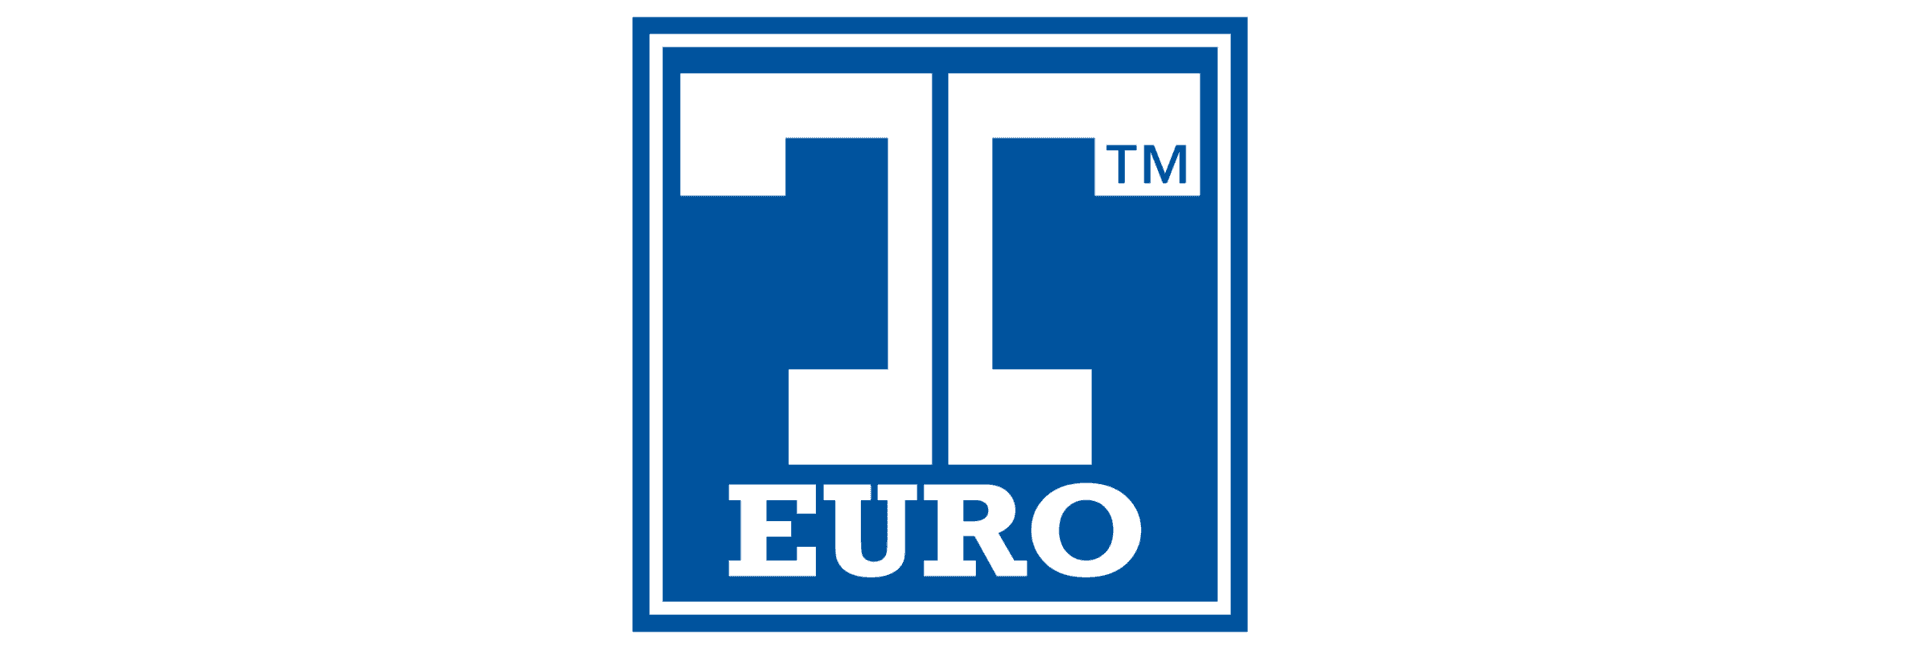 T Euro